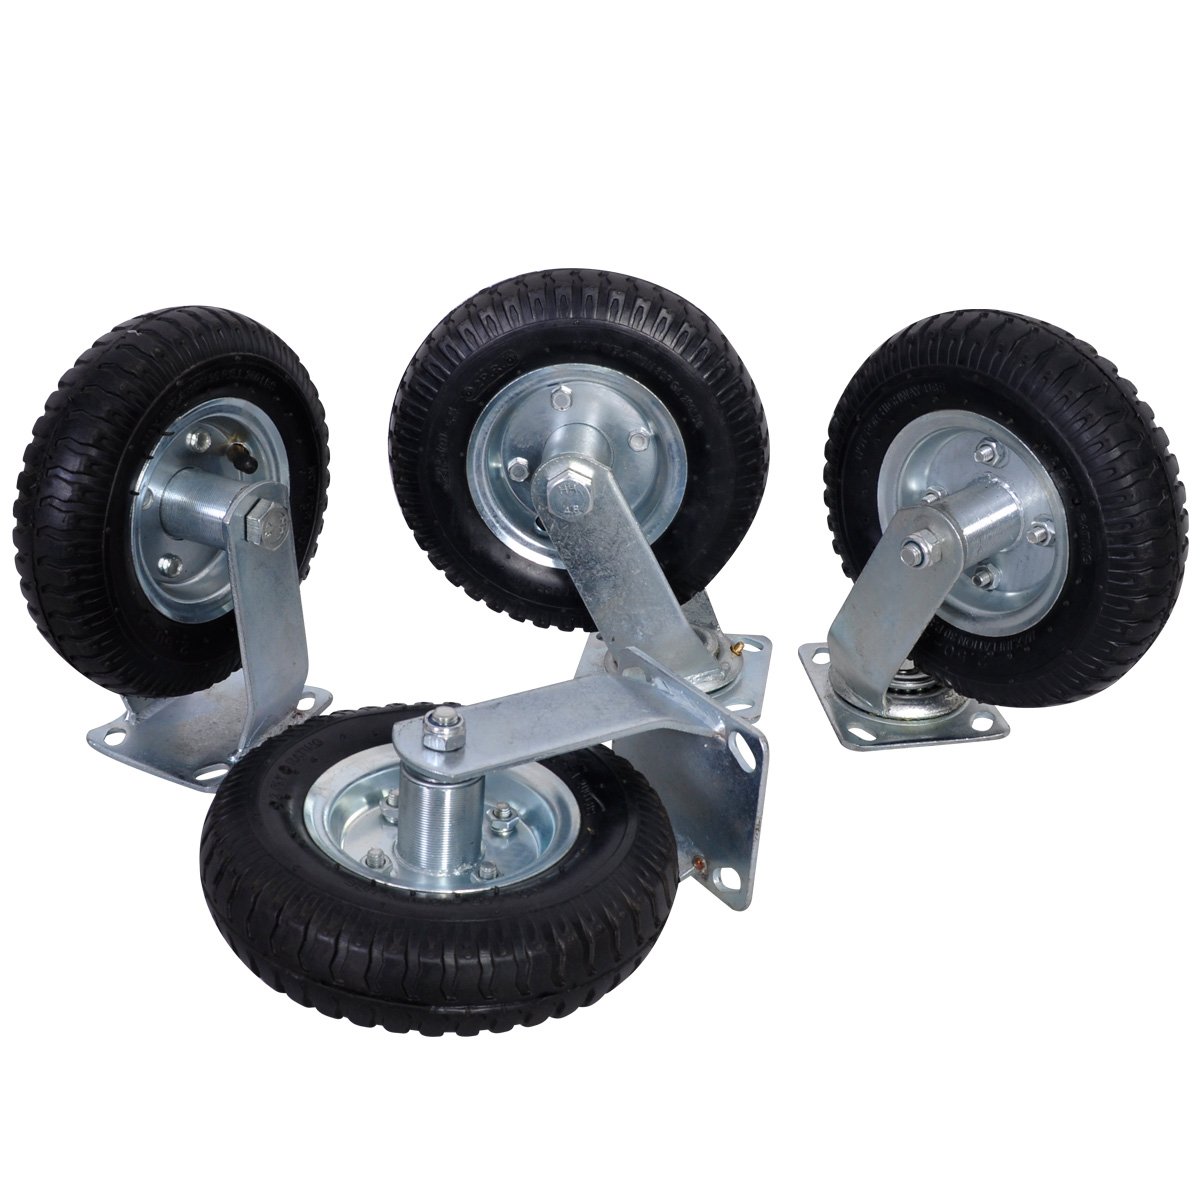 8 Inch Pneumatic Tire Set of 4 Rubber Tire Farm Trolley Wheels